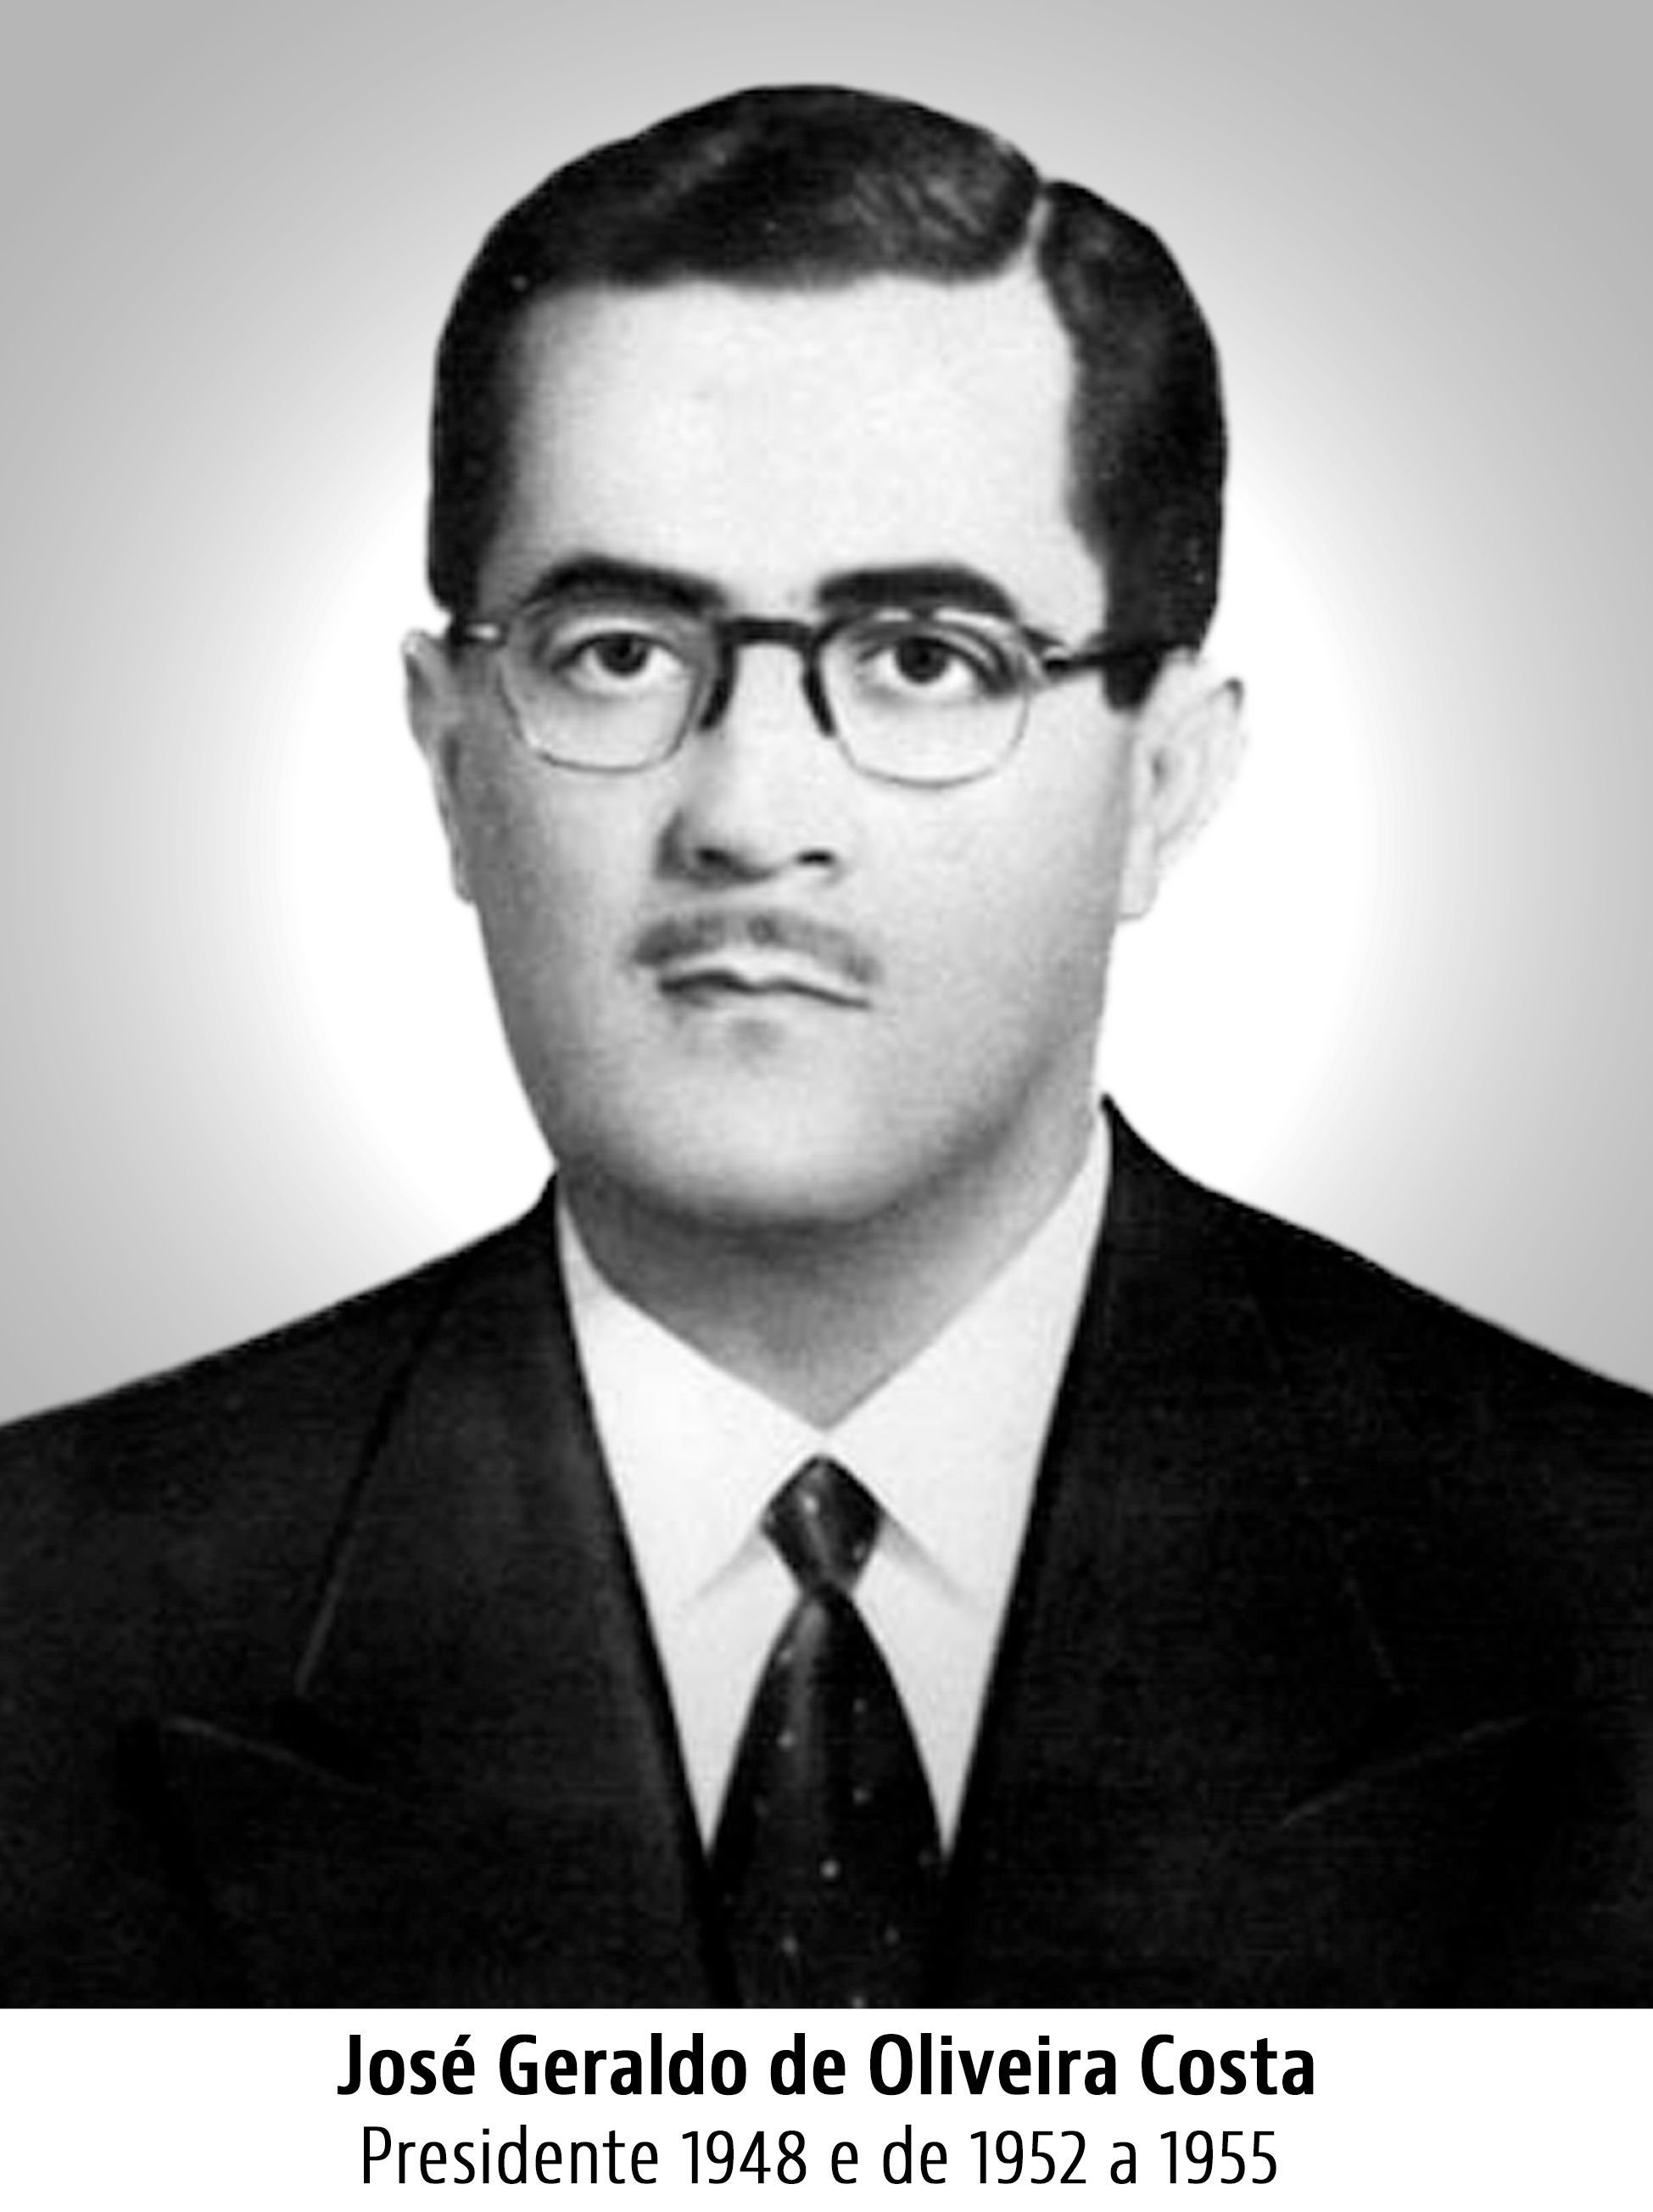 José Geraldo de Oliveira Costa